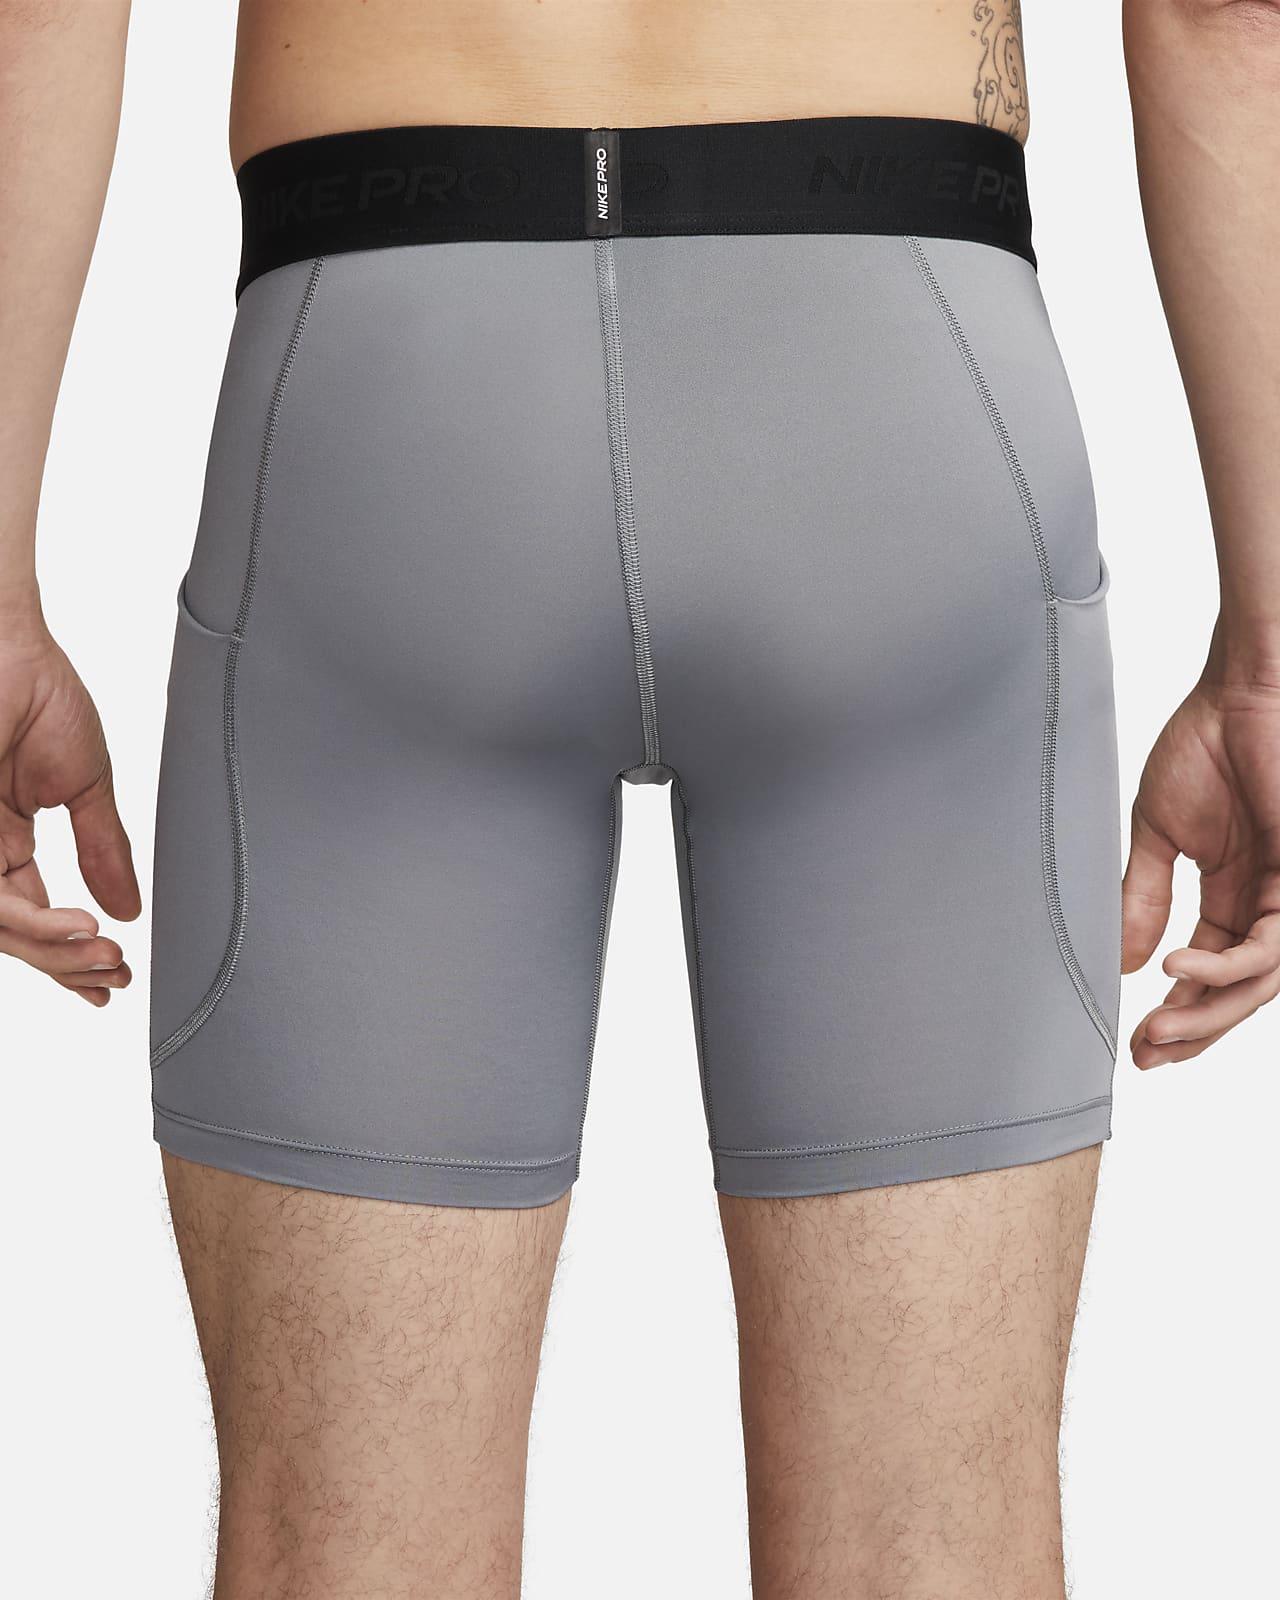 New Nike Pro Compression Dri Fit Max Pants Mens Sizes + Training